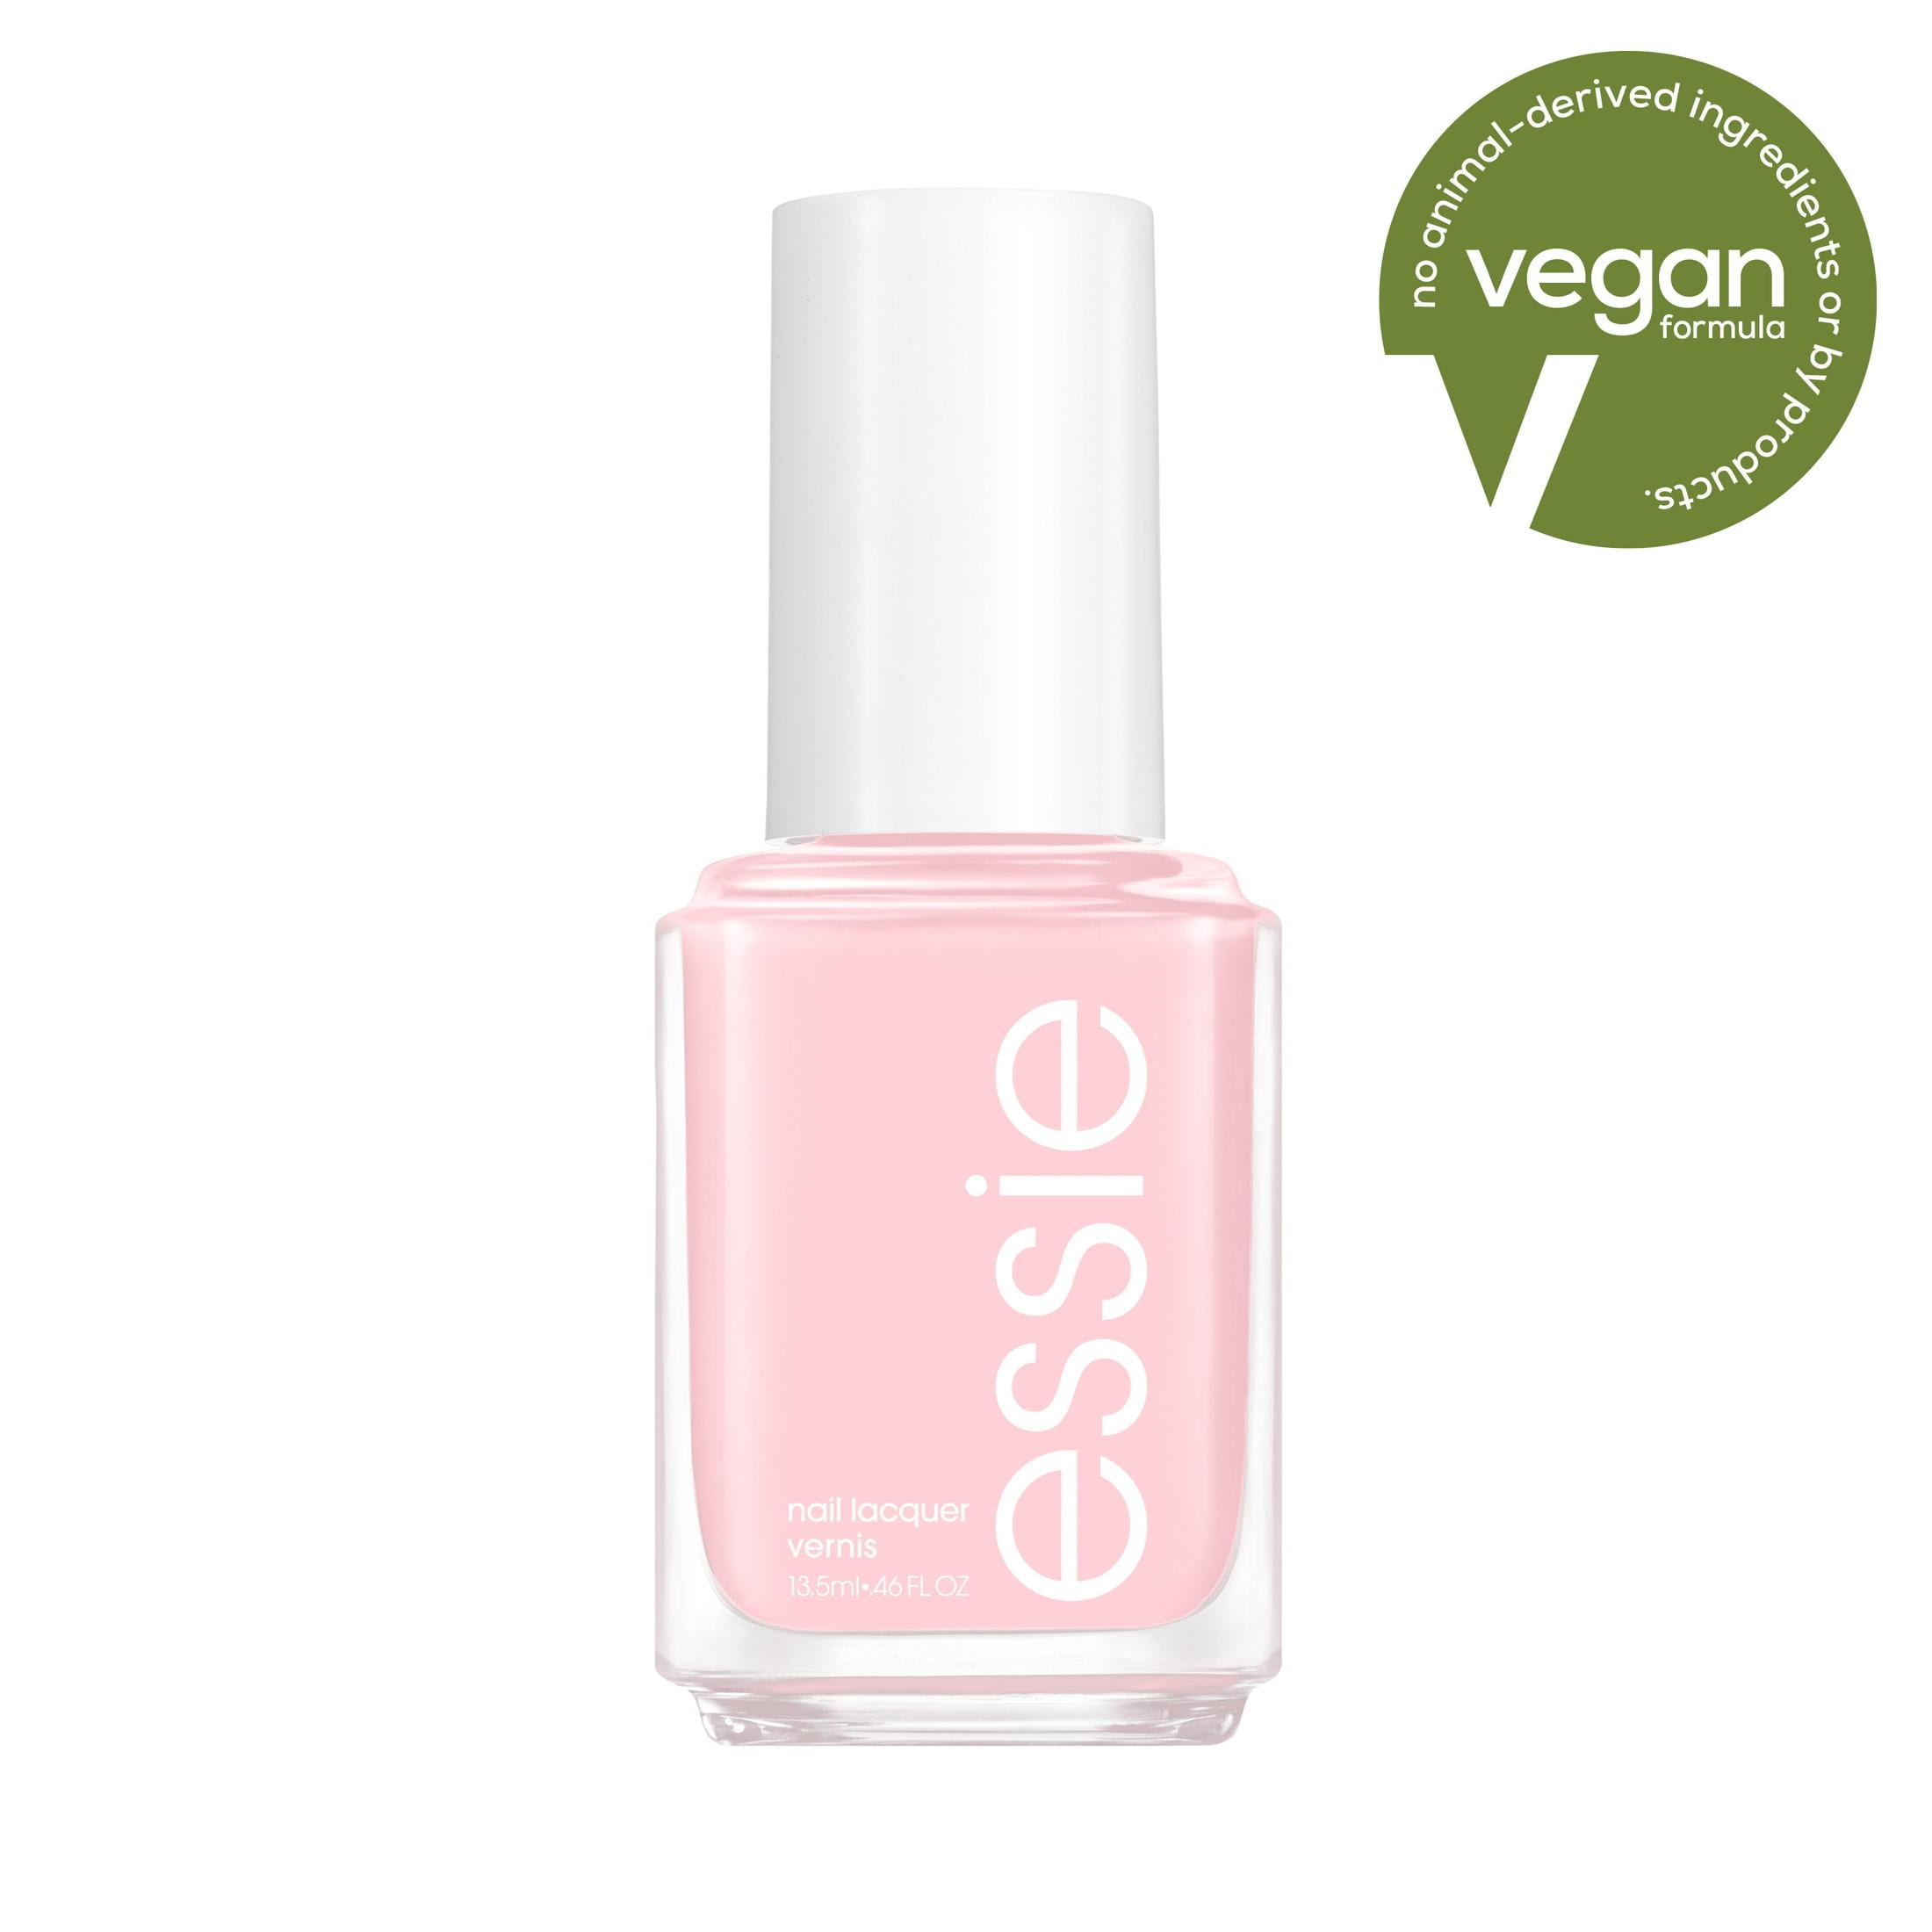 essie Salon Quality 8 Free Vegan Nail Polish, Light Pink, 0.46 oz Bottle - Walmart.com